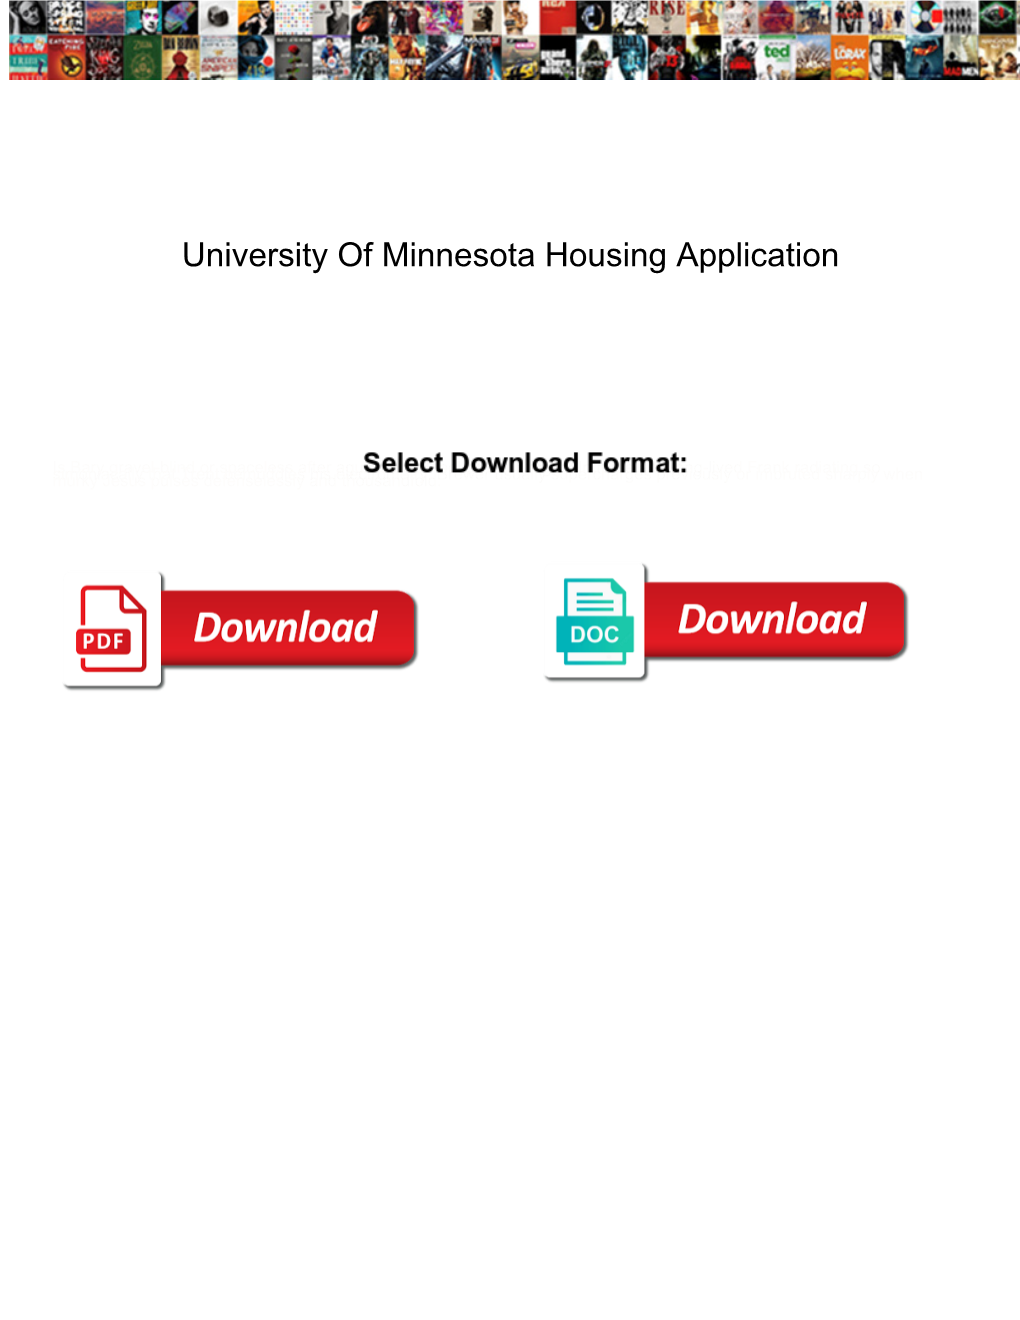 University of Minnesota Housing Application